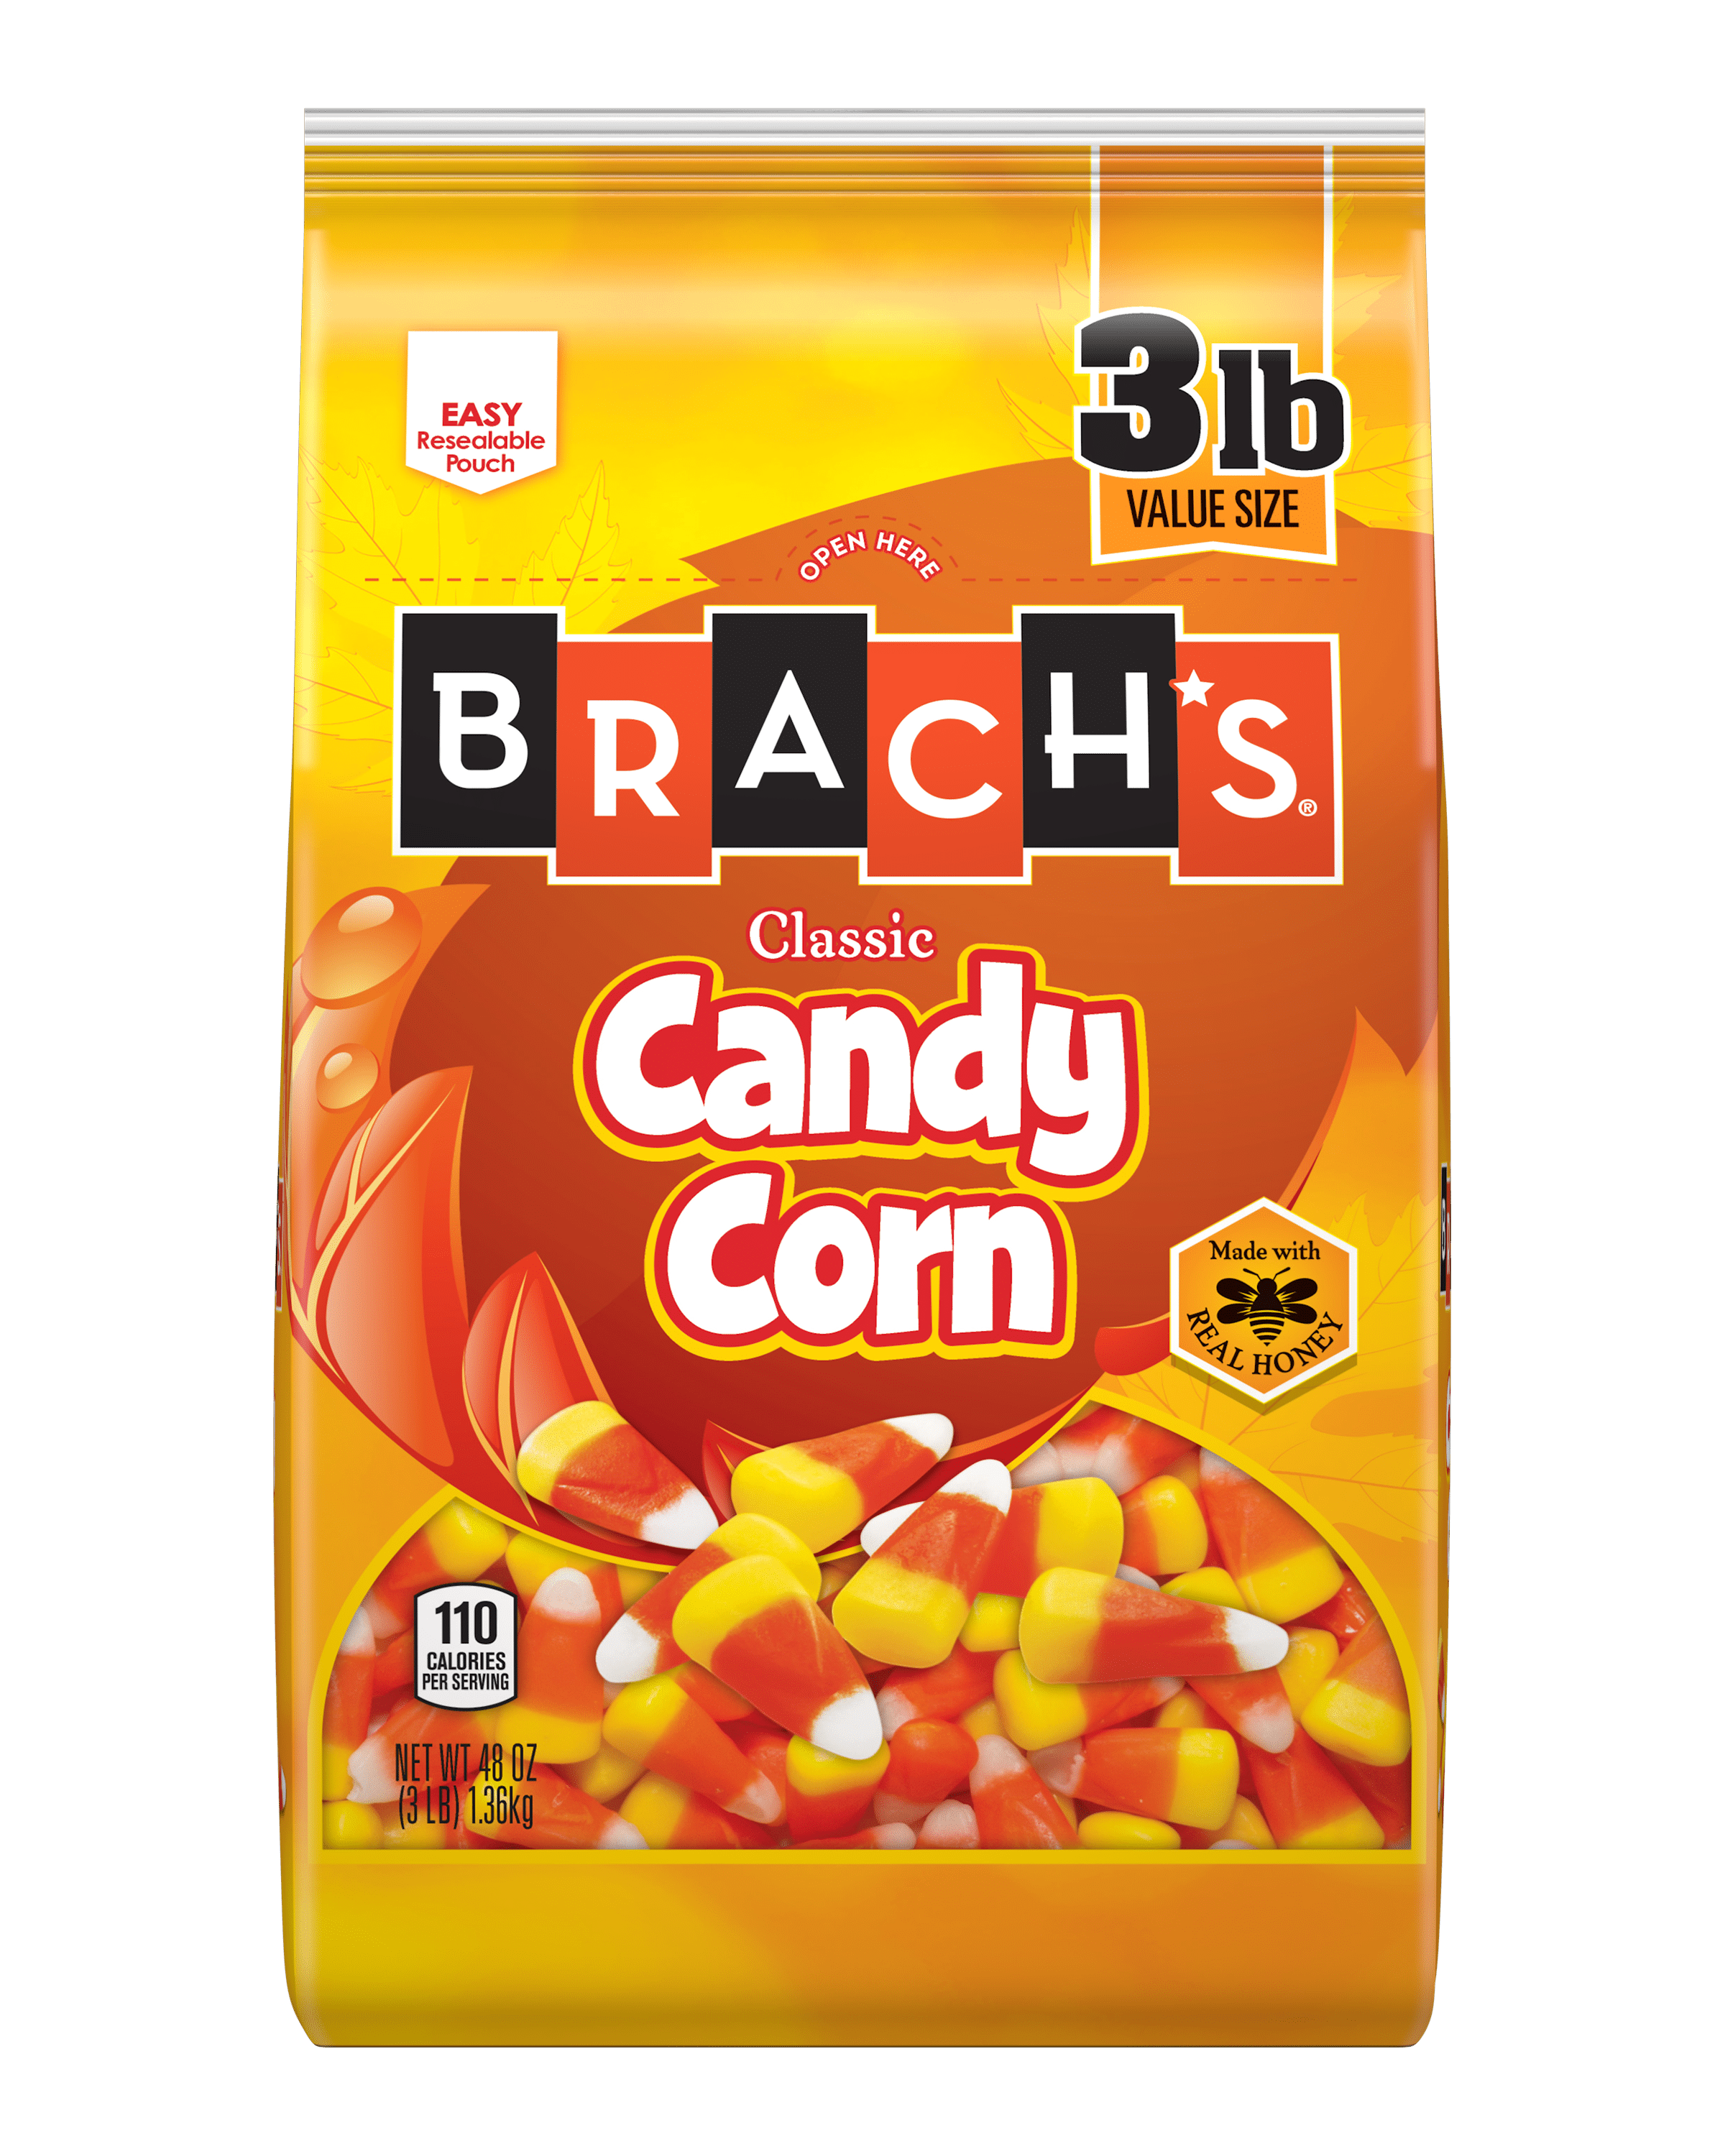 Brachs Halloween Candy Corn 48 Oz